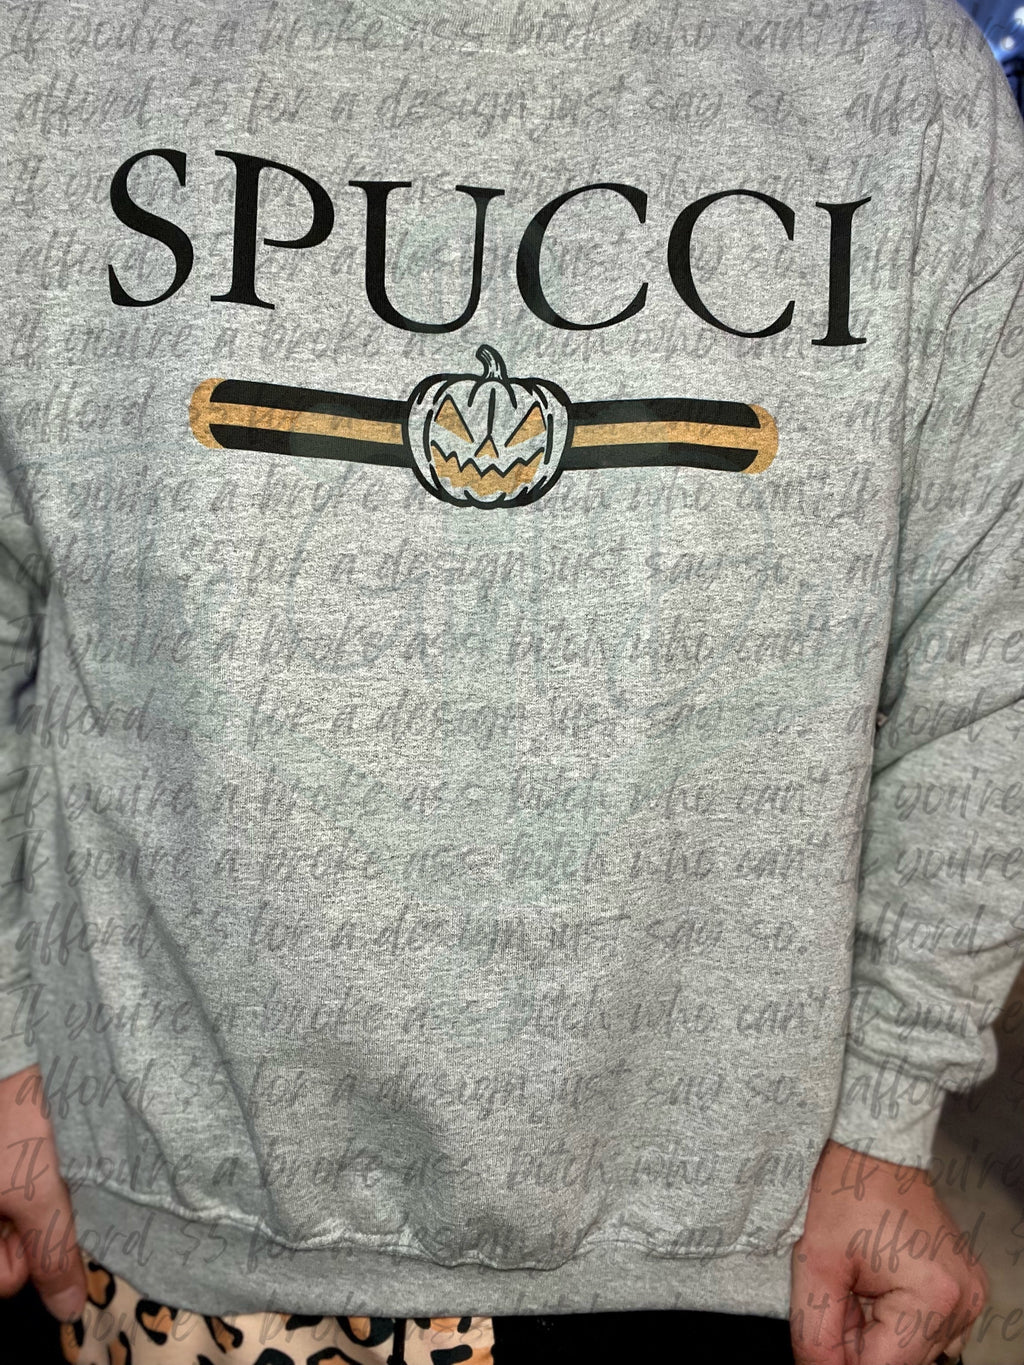 Spucci Top Design